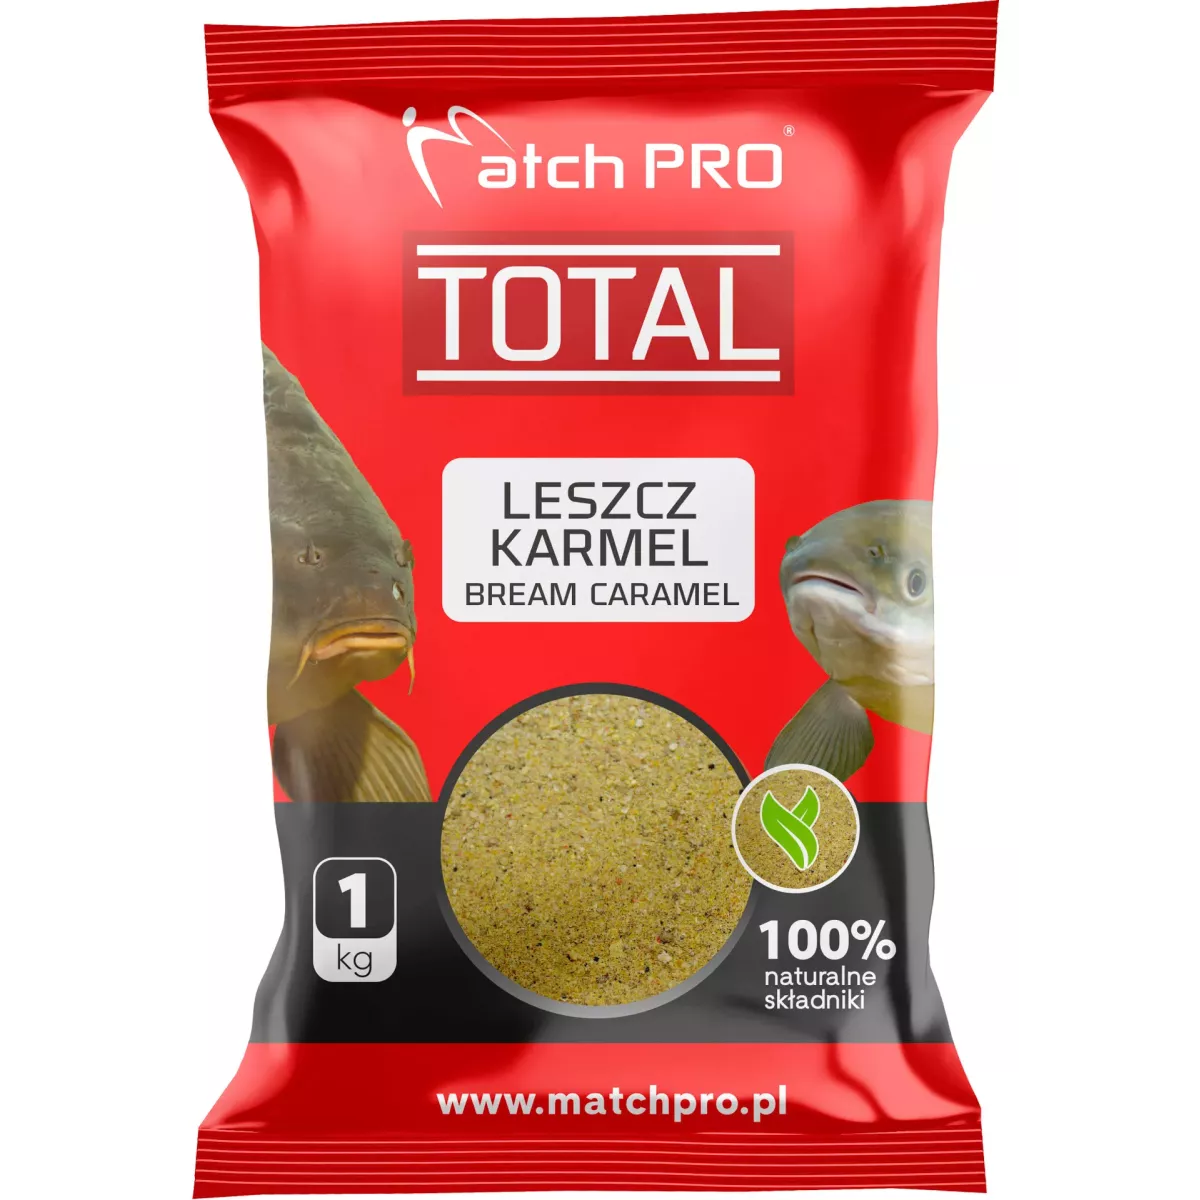 Zanęta MatchPro Total 1kg - LESZCZ KARMEL